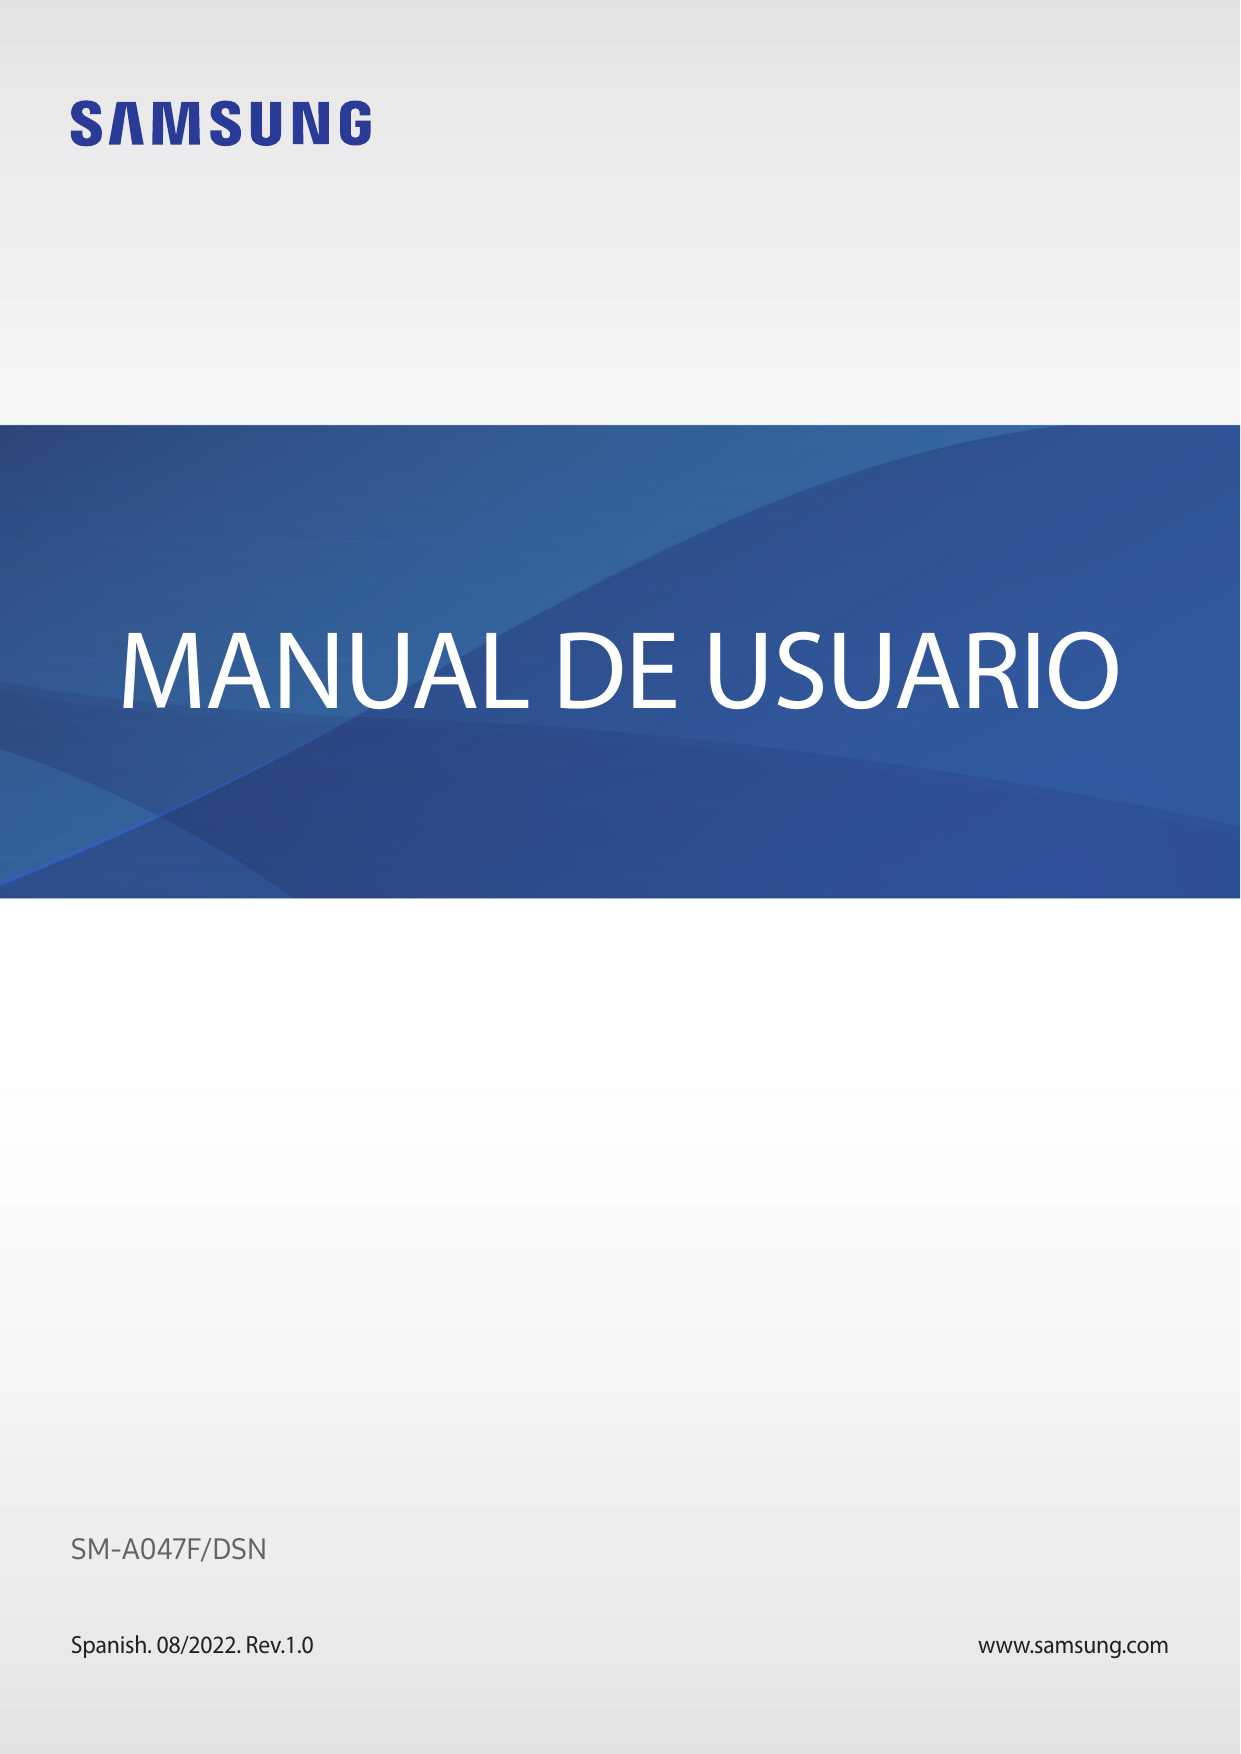 MANUAL DE USUARIOSM-A047F/DSNSpanish. 08/2022. Rev.1.0www.samsung.com